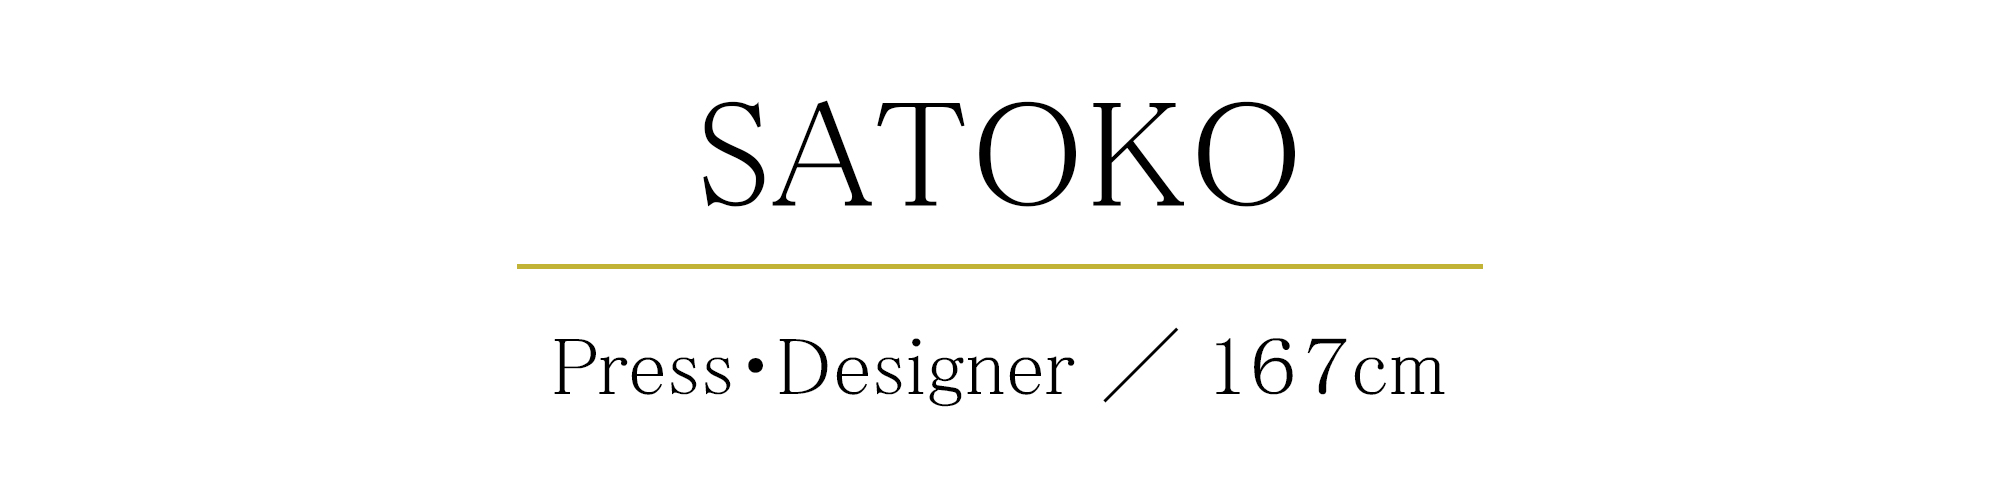 SATOKO Press/Designer 167cm